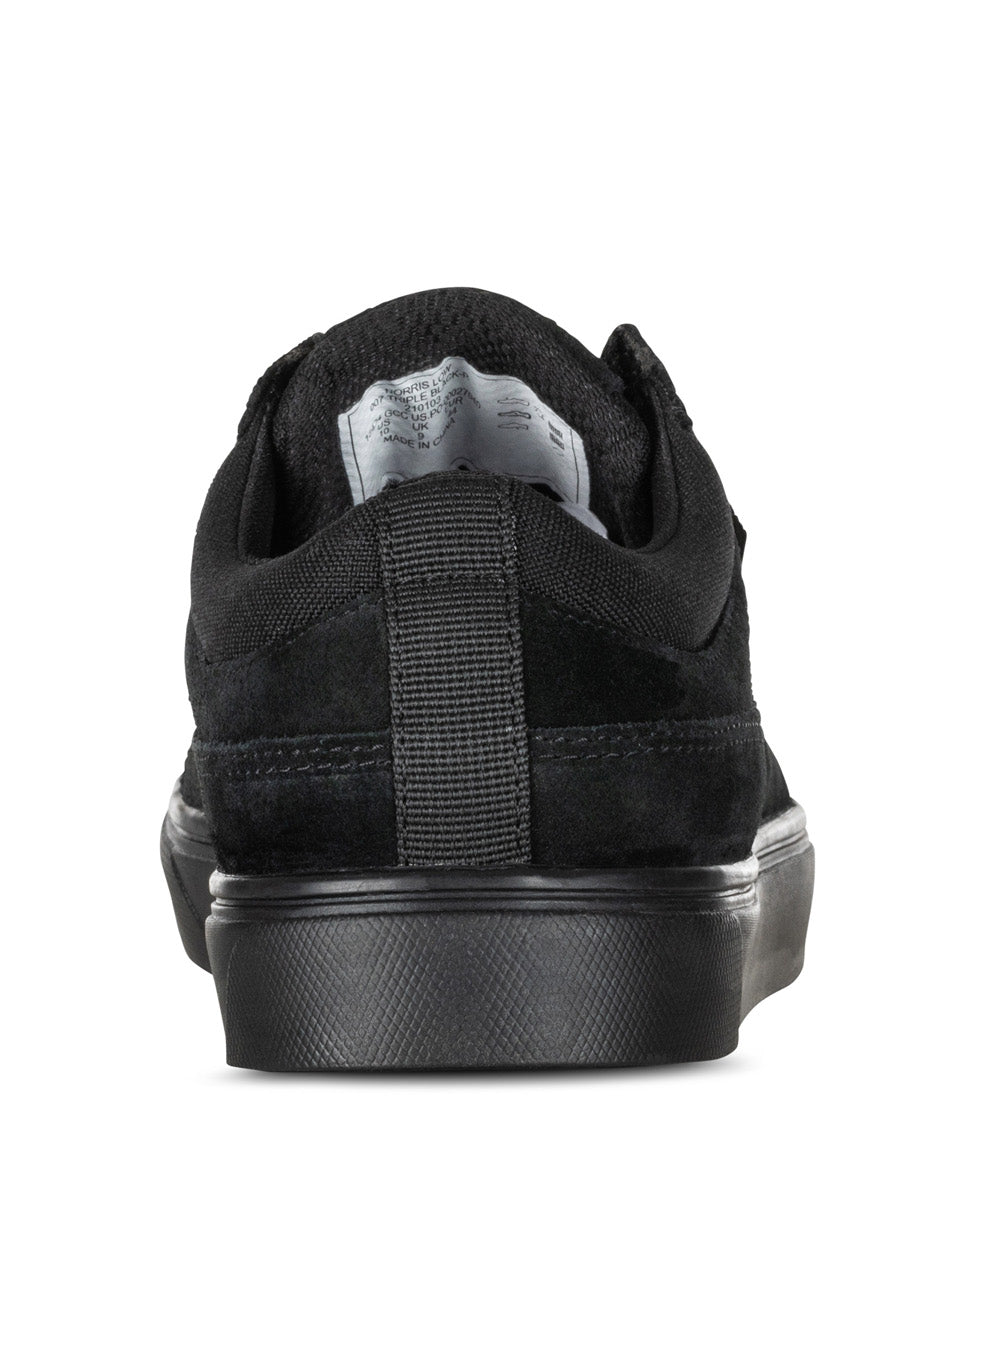 5.11 Tactical Norris Low Sneaker - Triple Black - TacSource